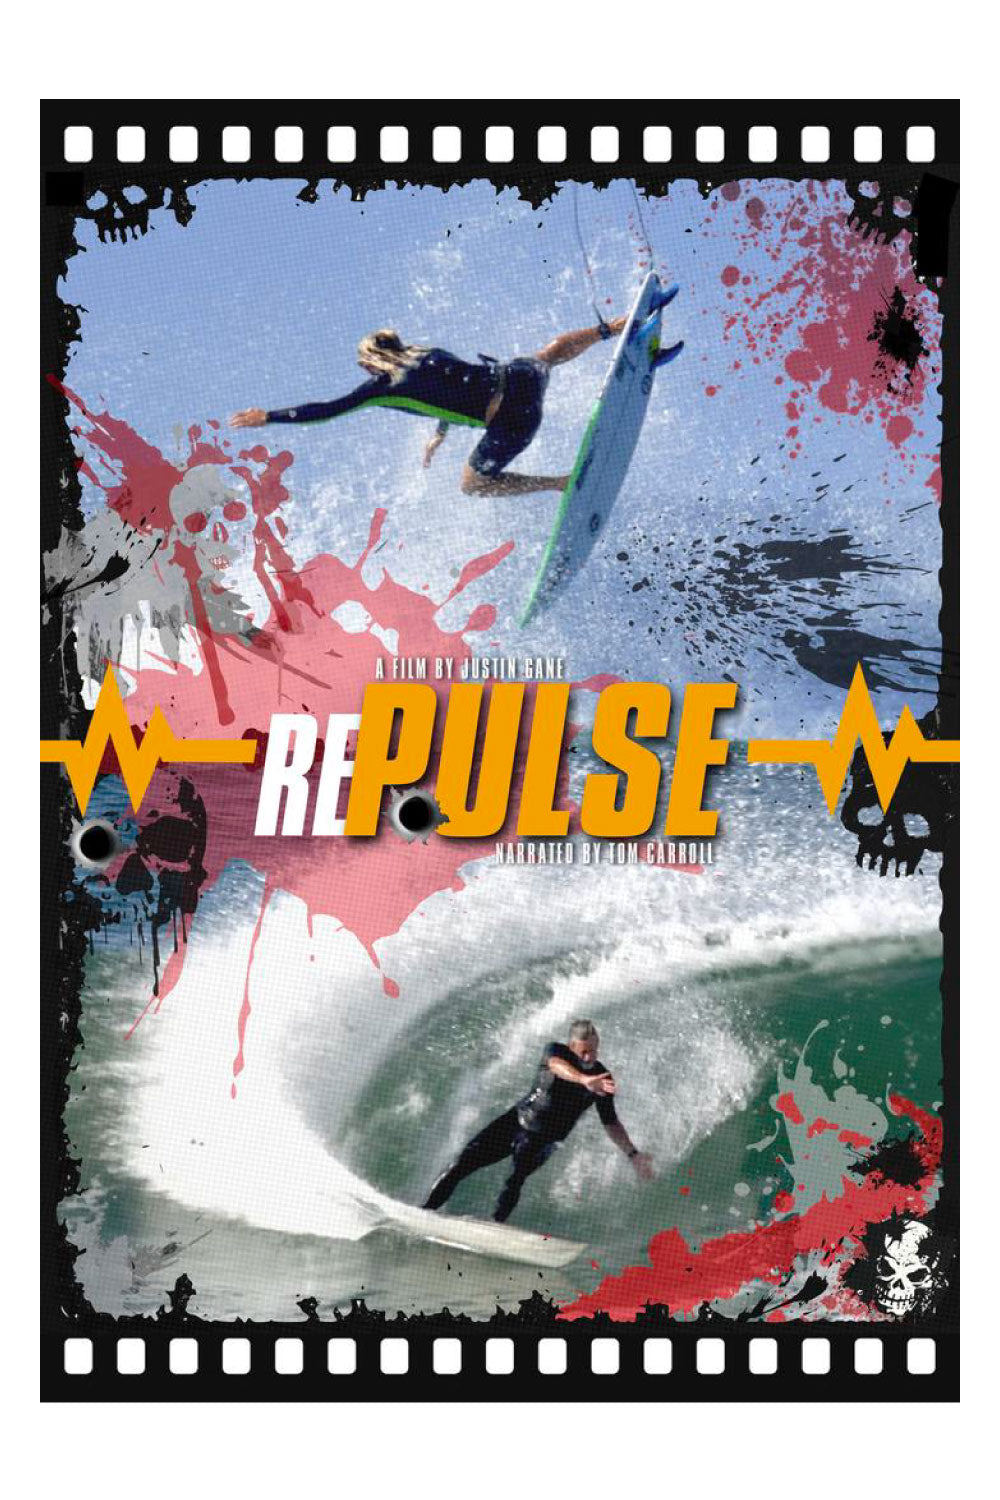 RE-PULSE Surfing DVD